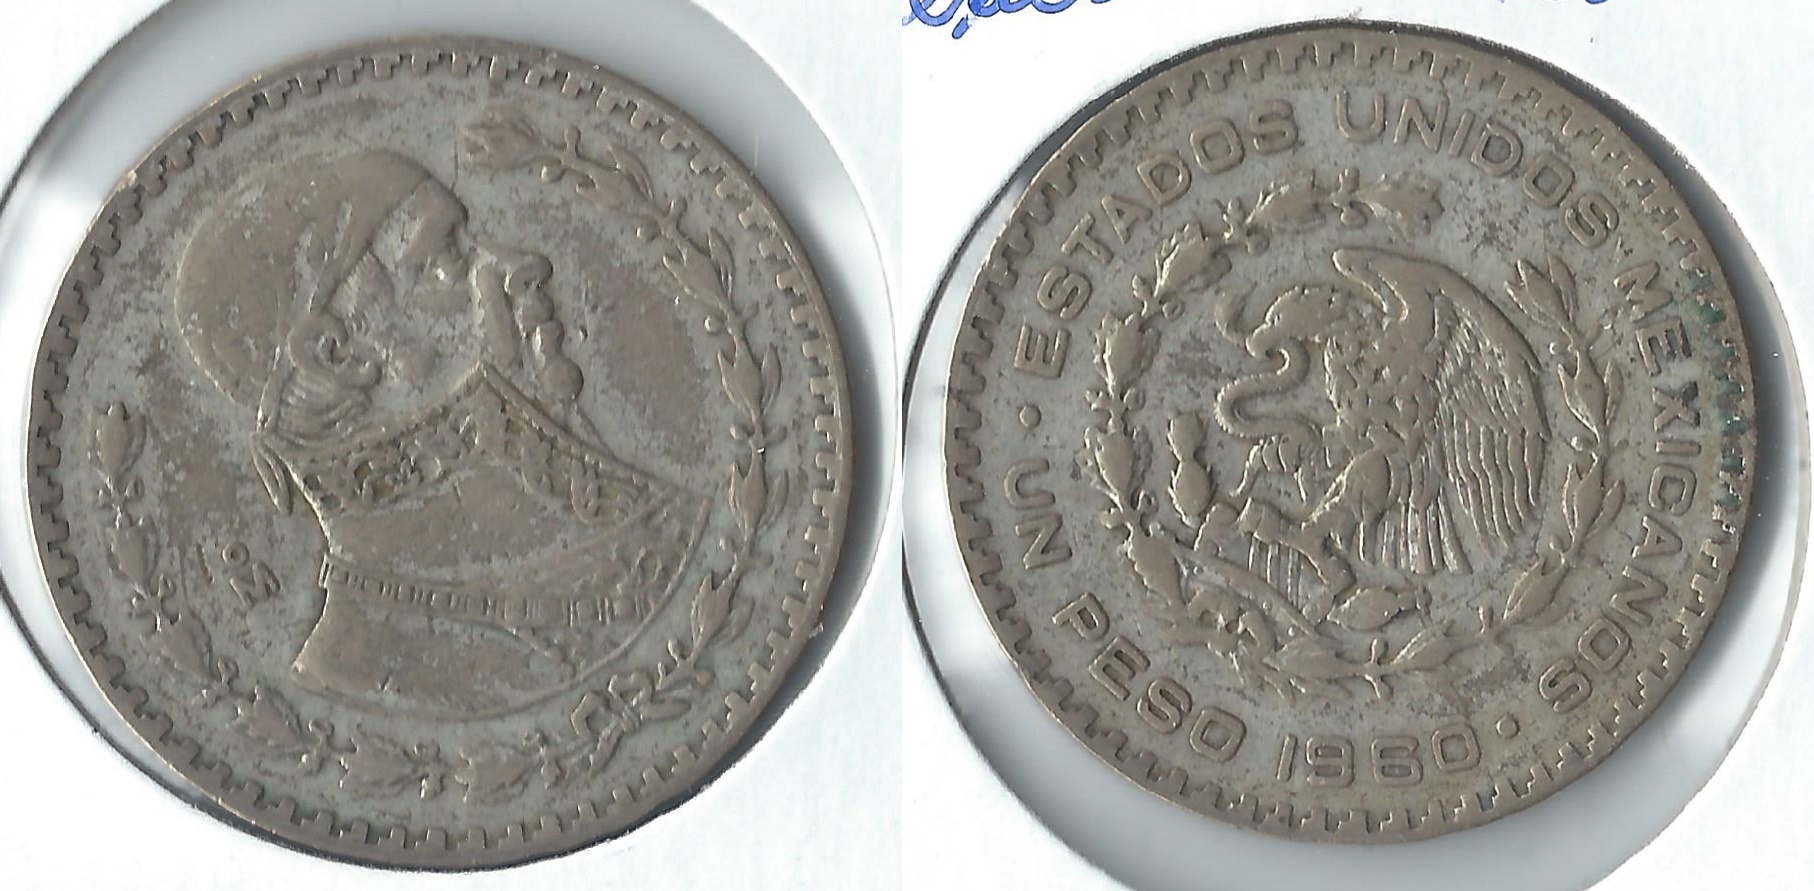 1960 mexico 1 peso.jpg